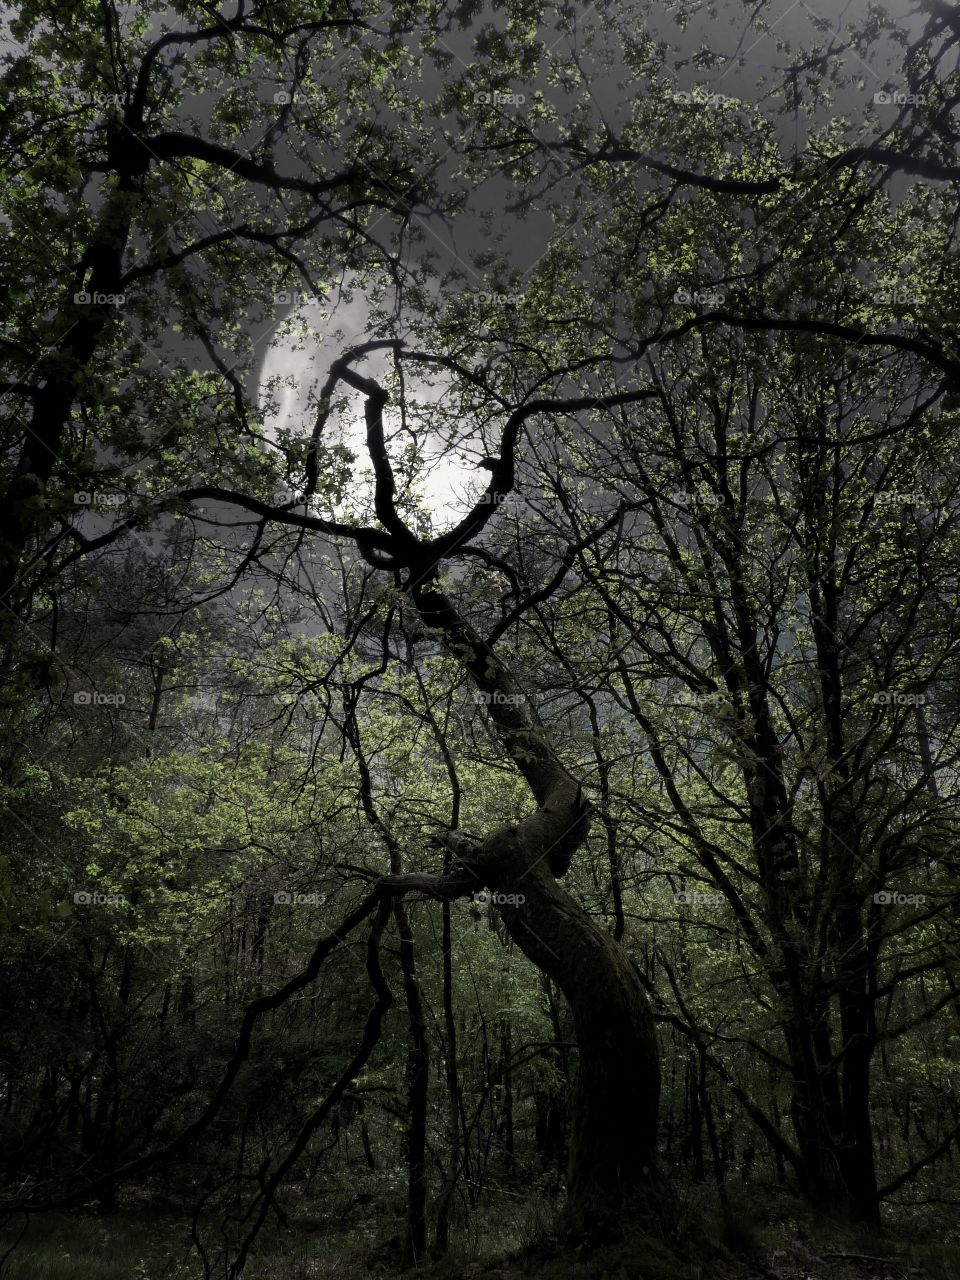 Moon and tree 